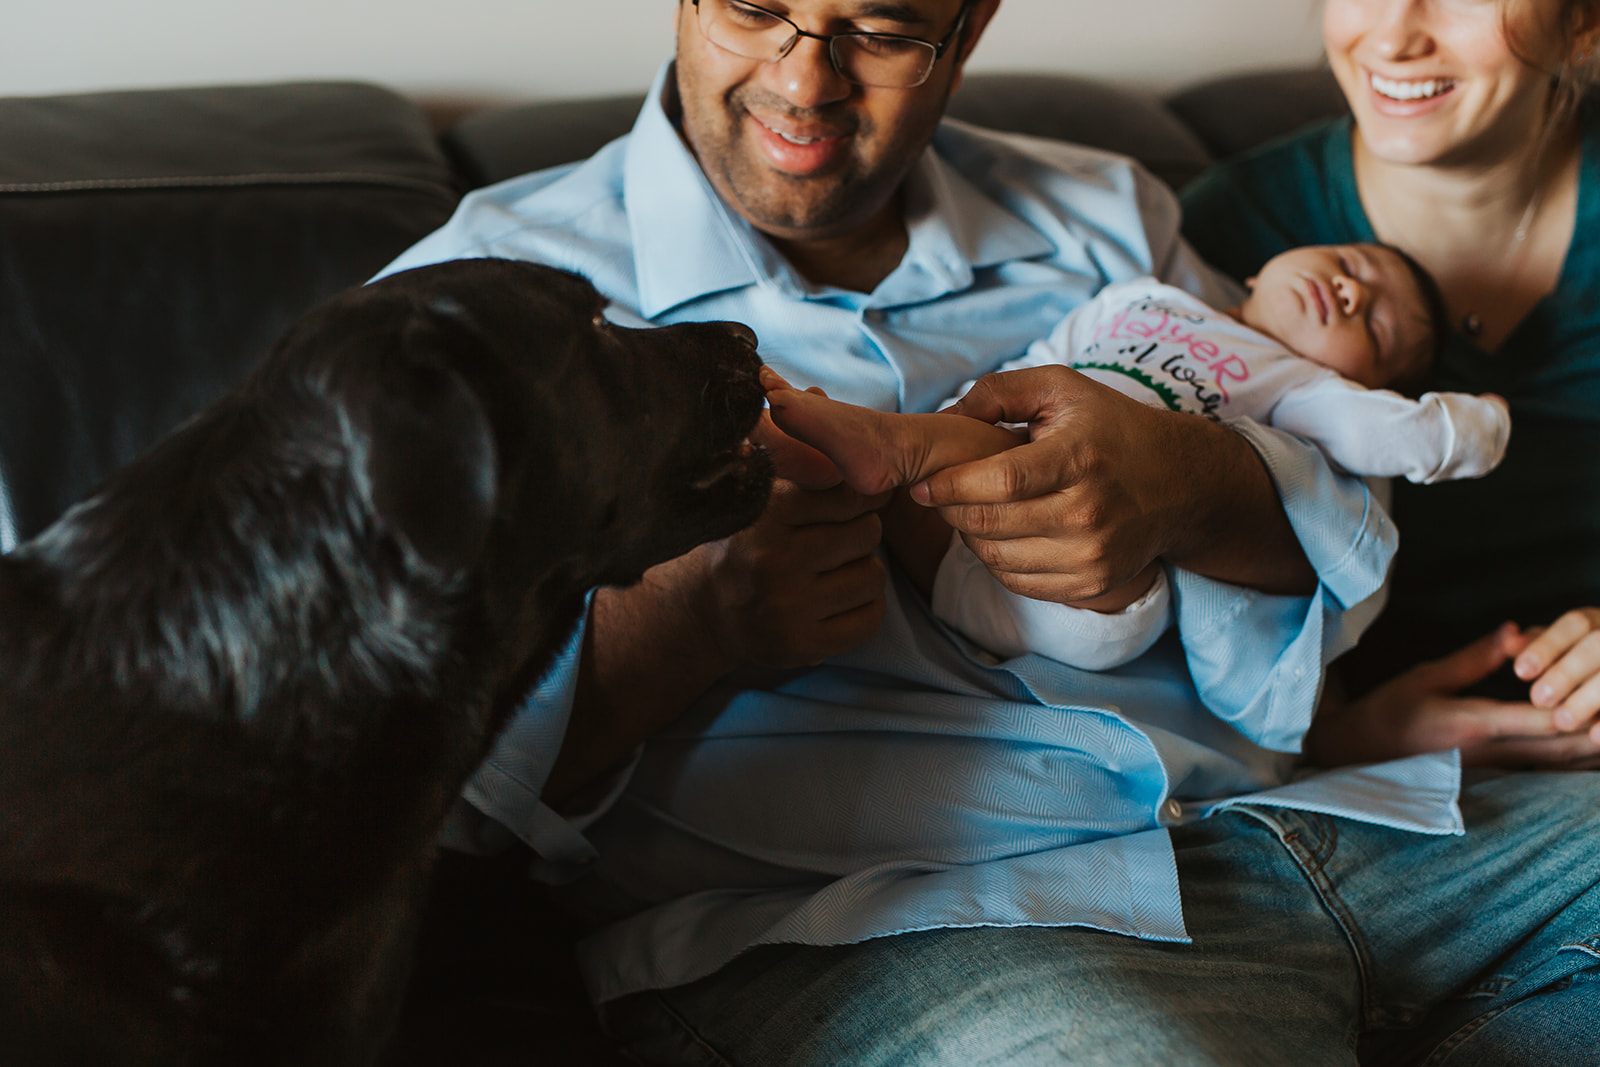 Edmonton newborn photography at home with dog